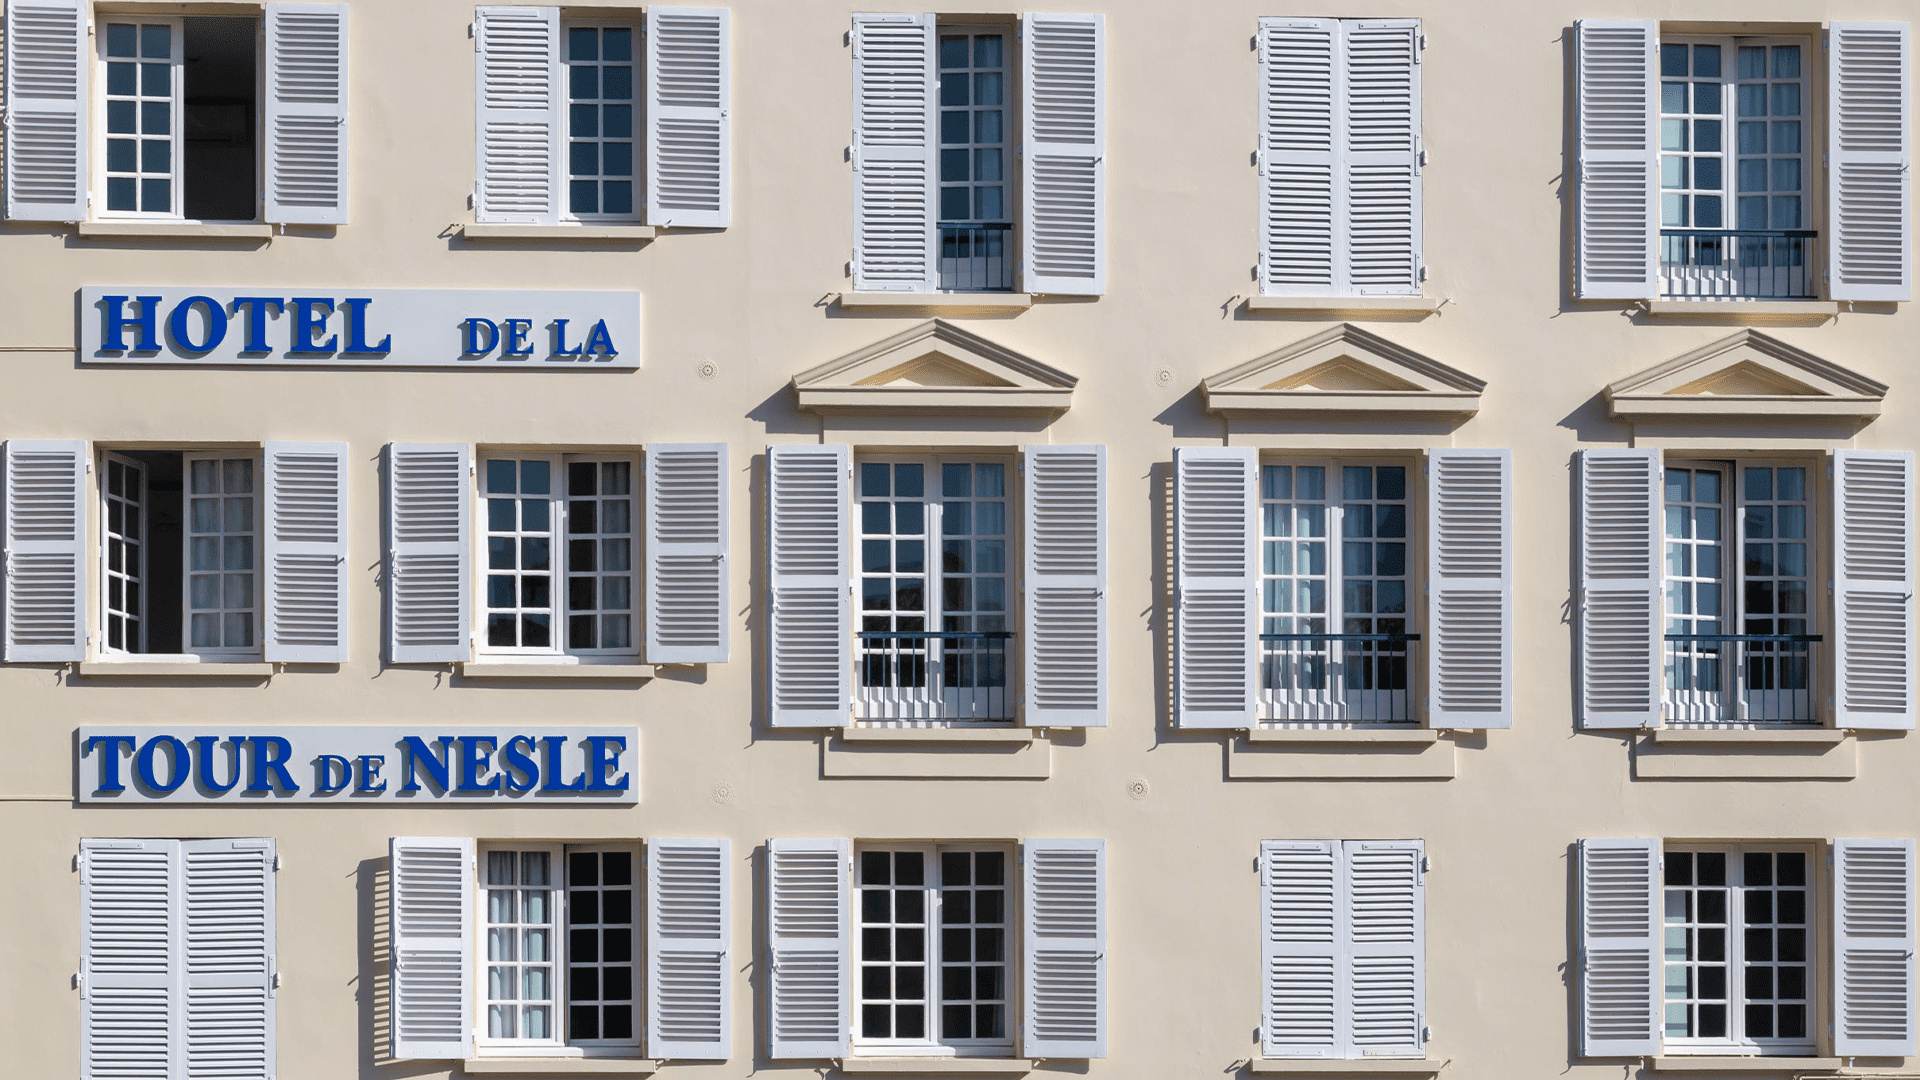 Hotel La Tour de Nesle - Façade - La Rochelle